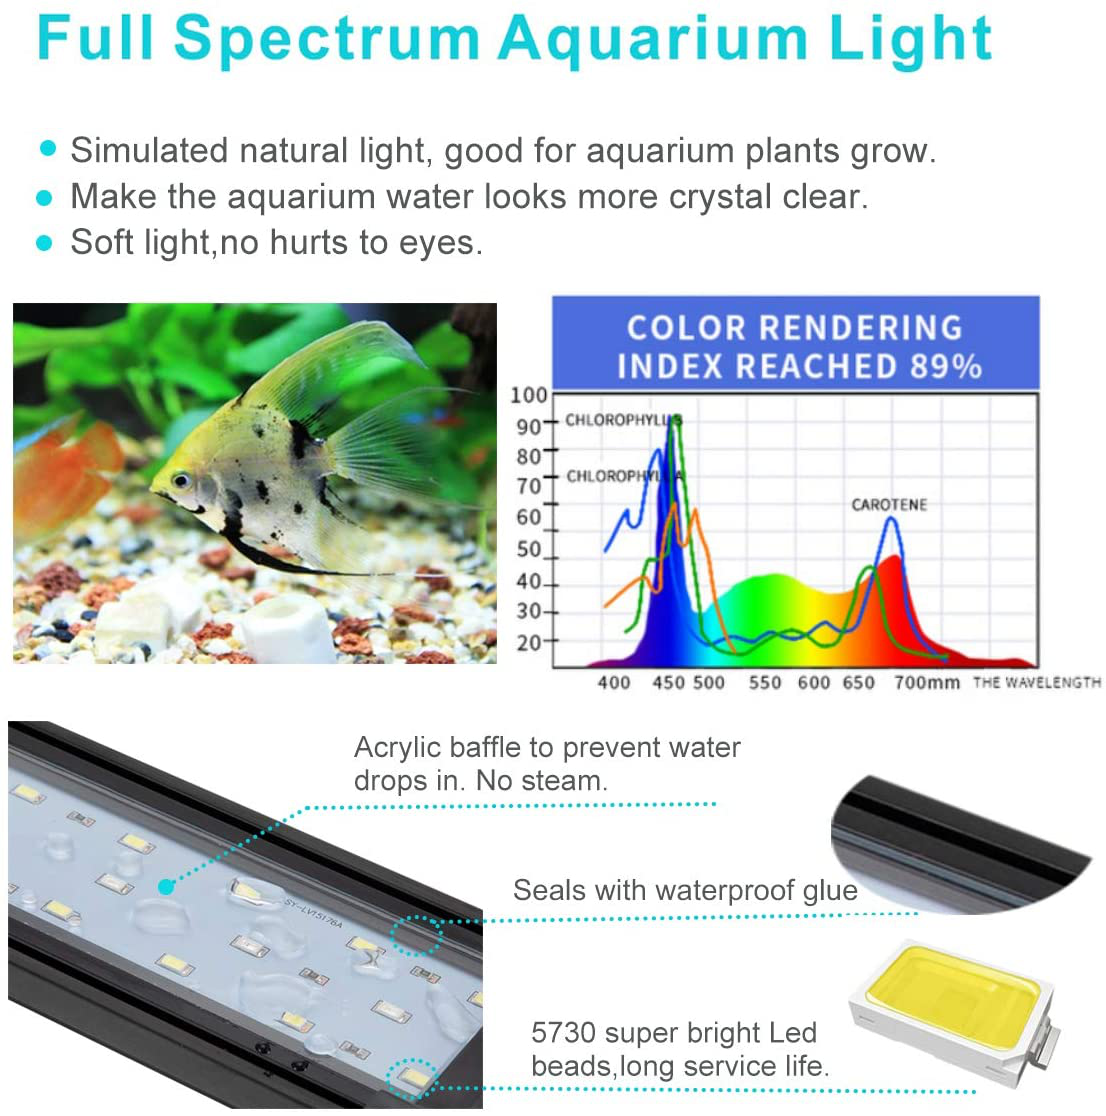 Hygger 14W Full Spectrum Aquarium Light with Aluminum Alloy Shell Extendable Brackets, White Blue Red Leds, External Controller, for Freshwater Fish Tank (18-24 Inch)